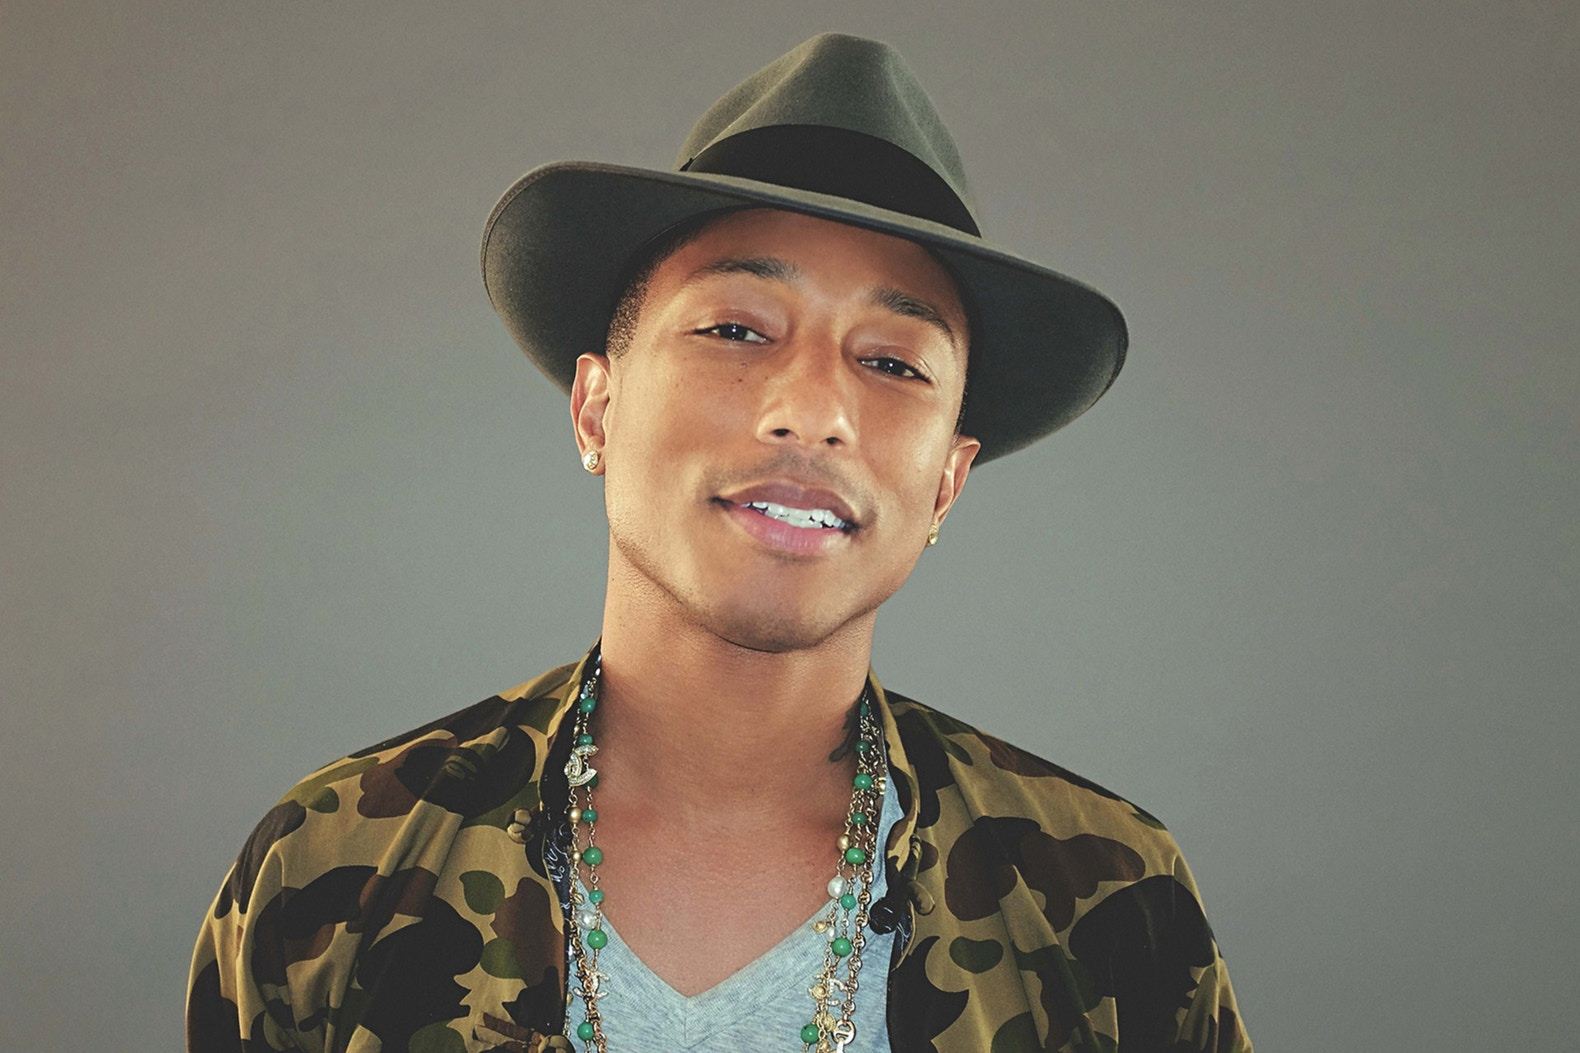 Pharrell 接受《华尔街日报》专访谈及对旧衣物的看法和喜爱的女明星